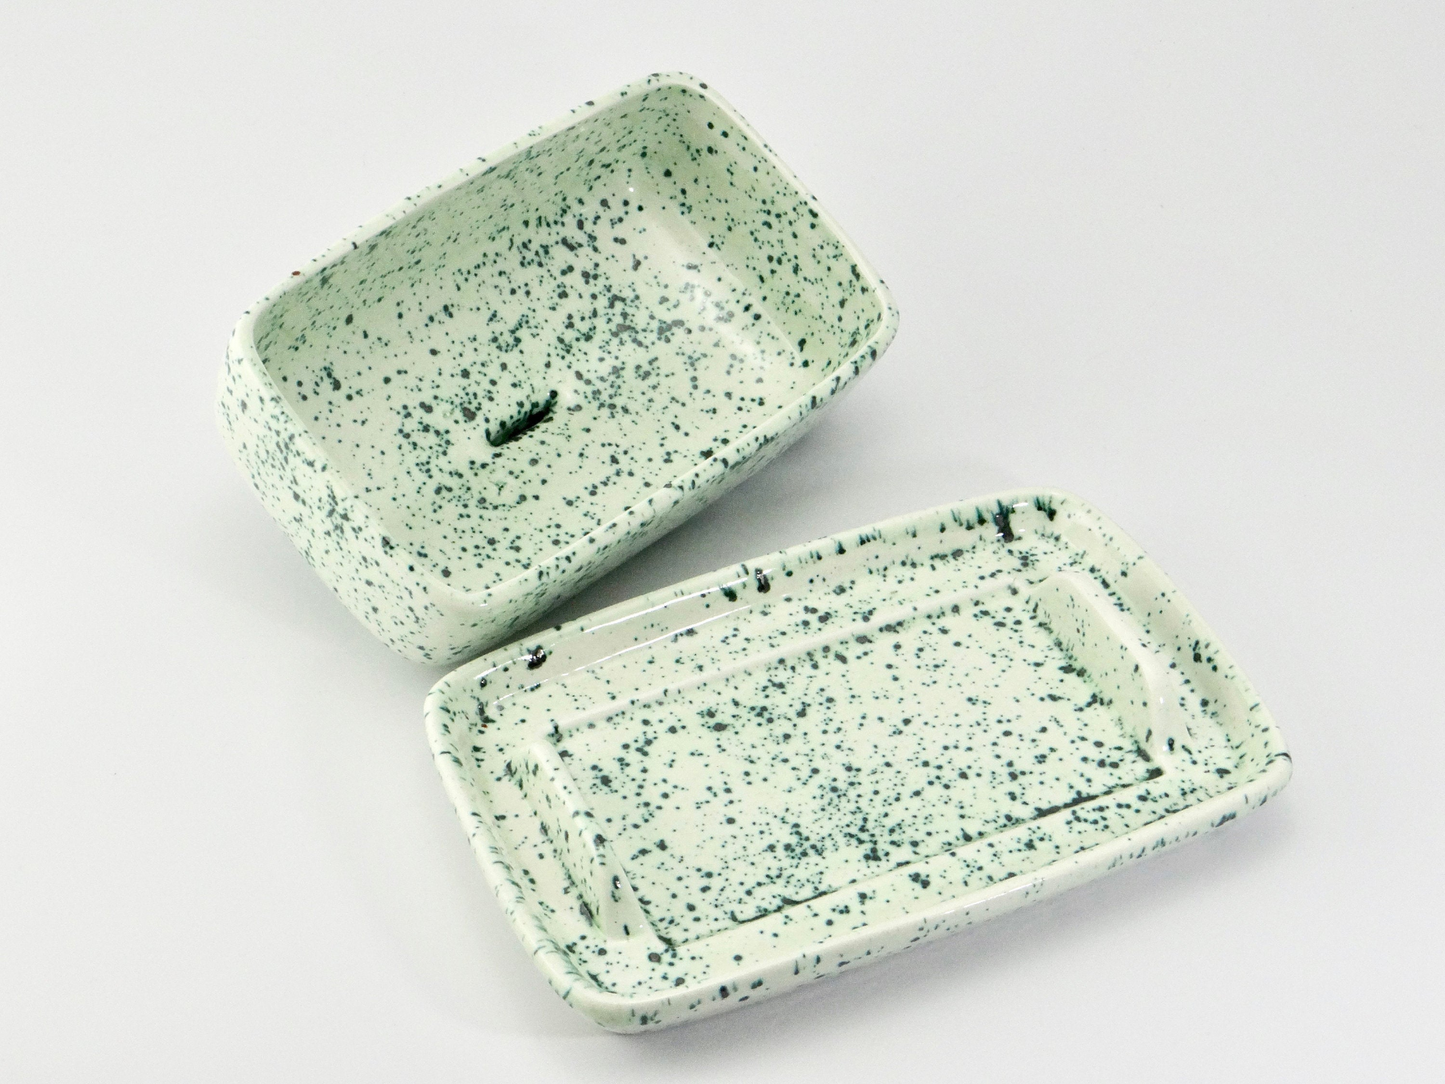 Butter Dish, Speckled Green Glaze